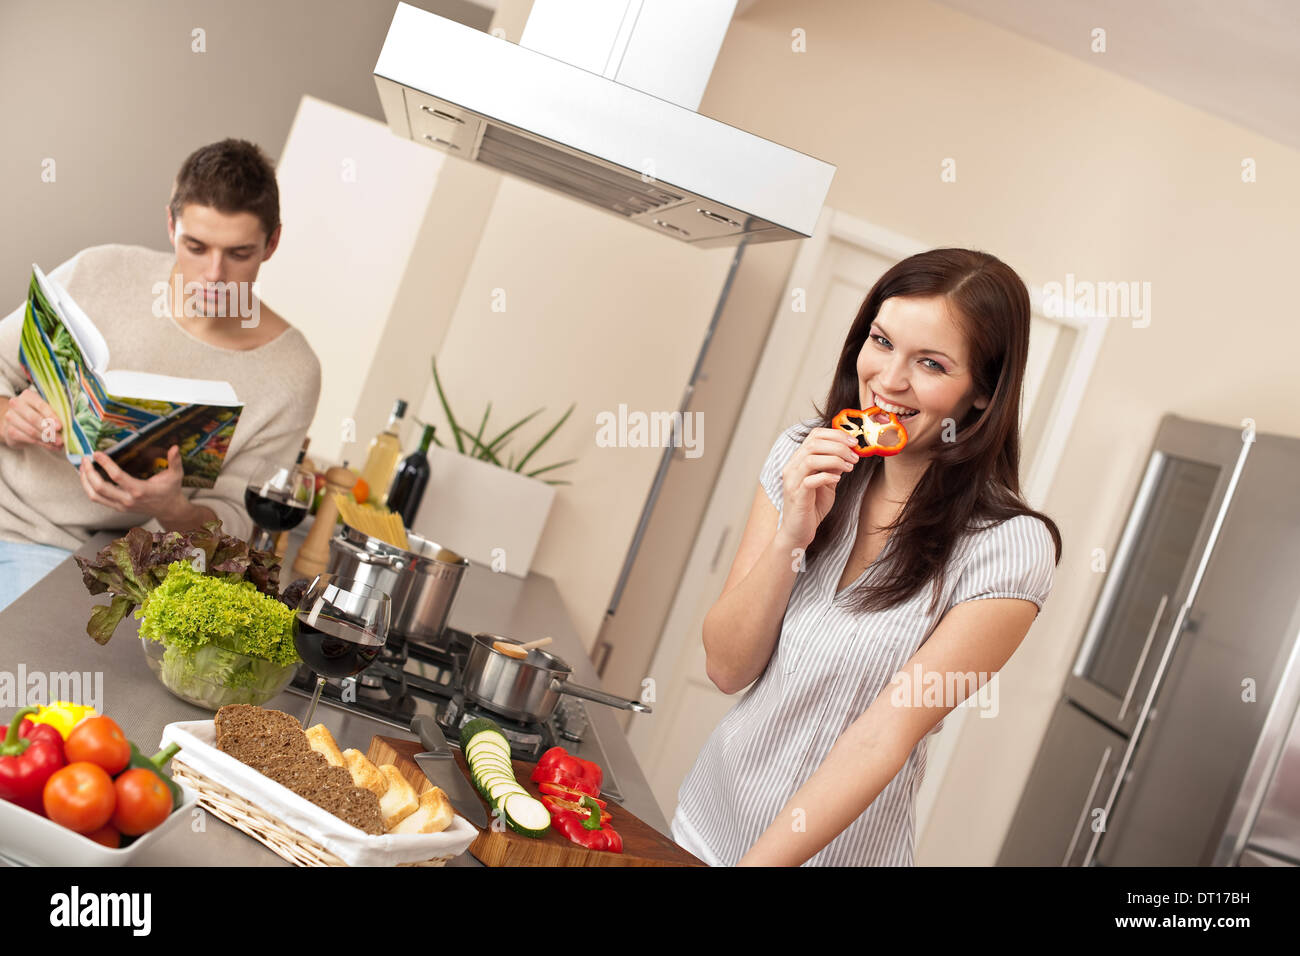 2 мужа на кухне. Пара завтракает на кухне. Девушка борщом парня кормит. Фото женщина кормит мужчину борщом. Мужчина кормит женщину с рук.